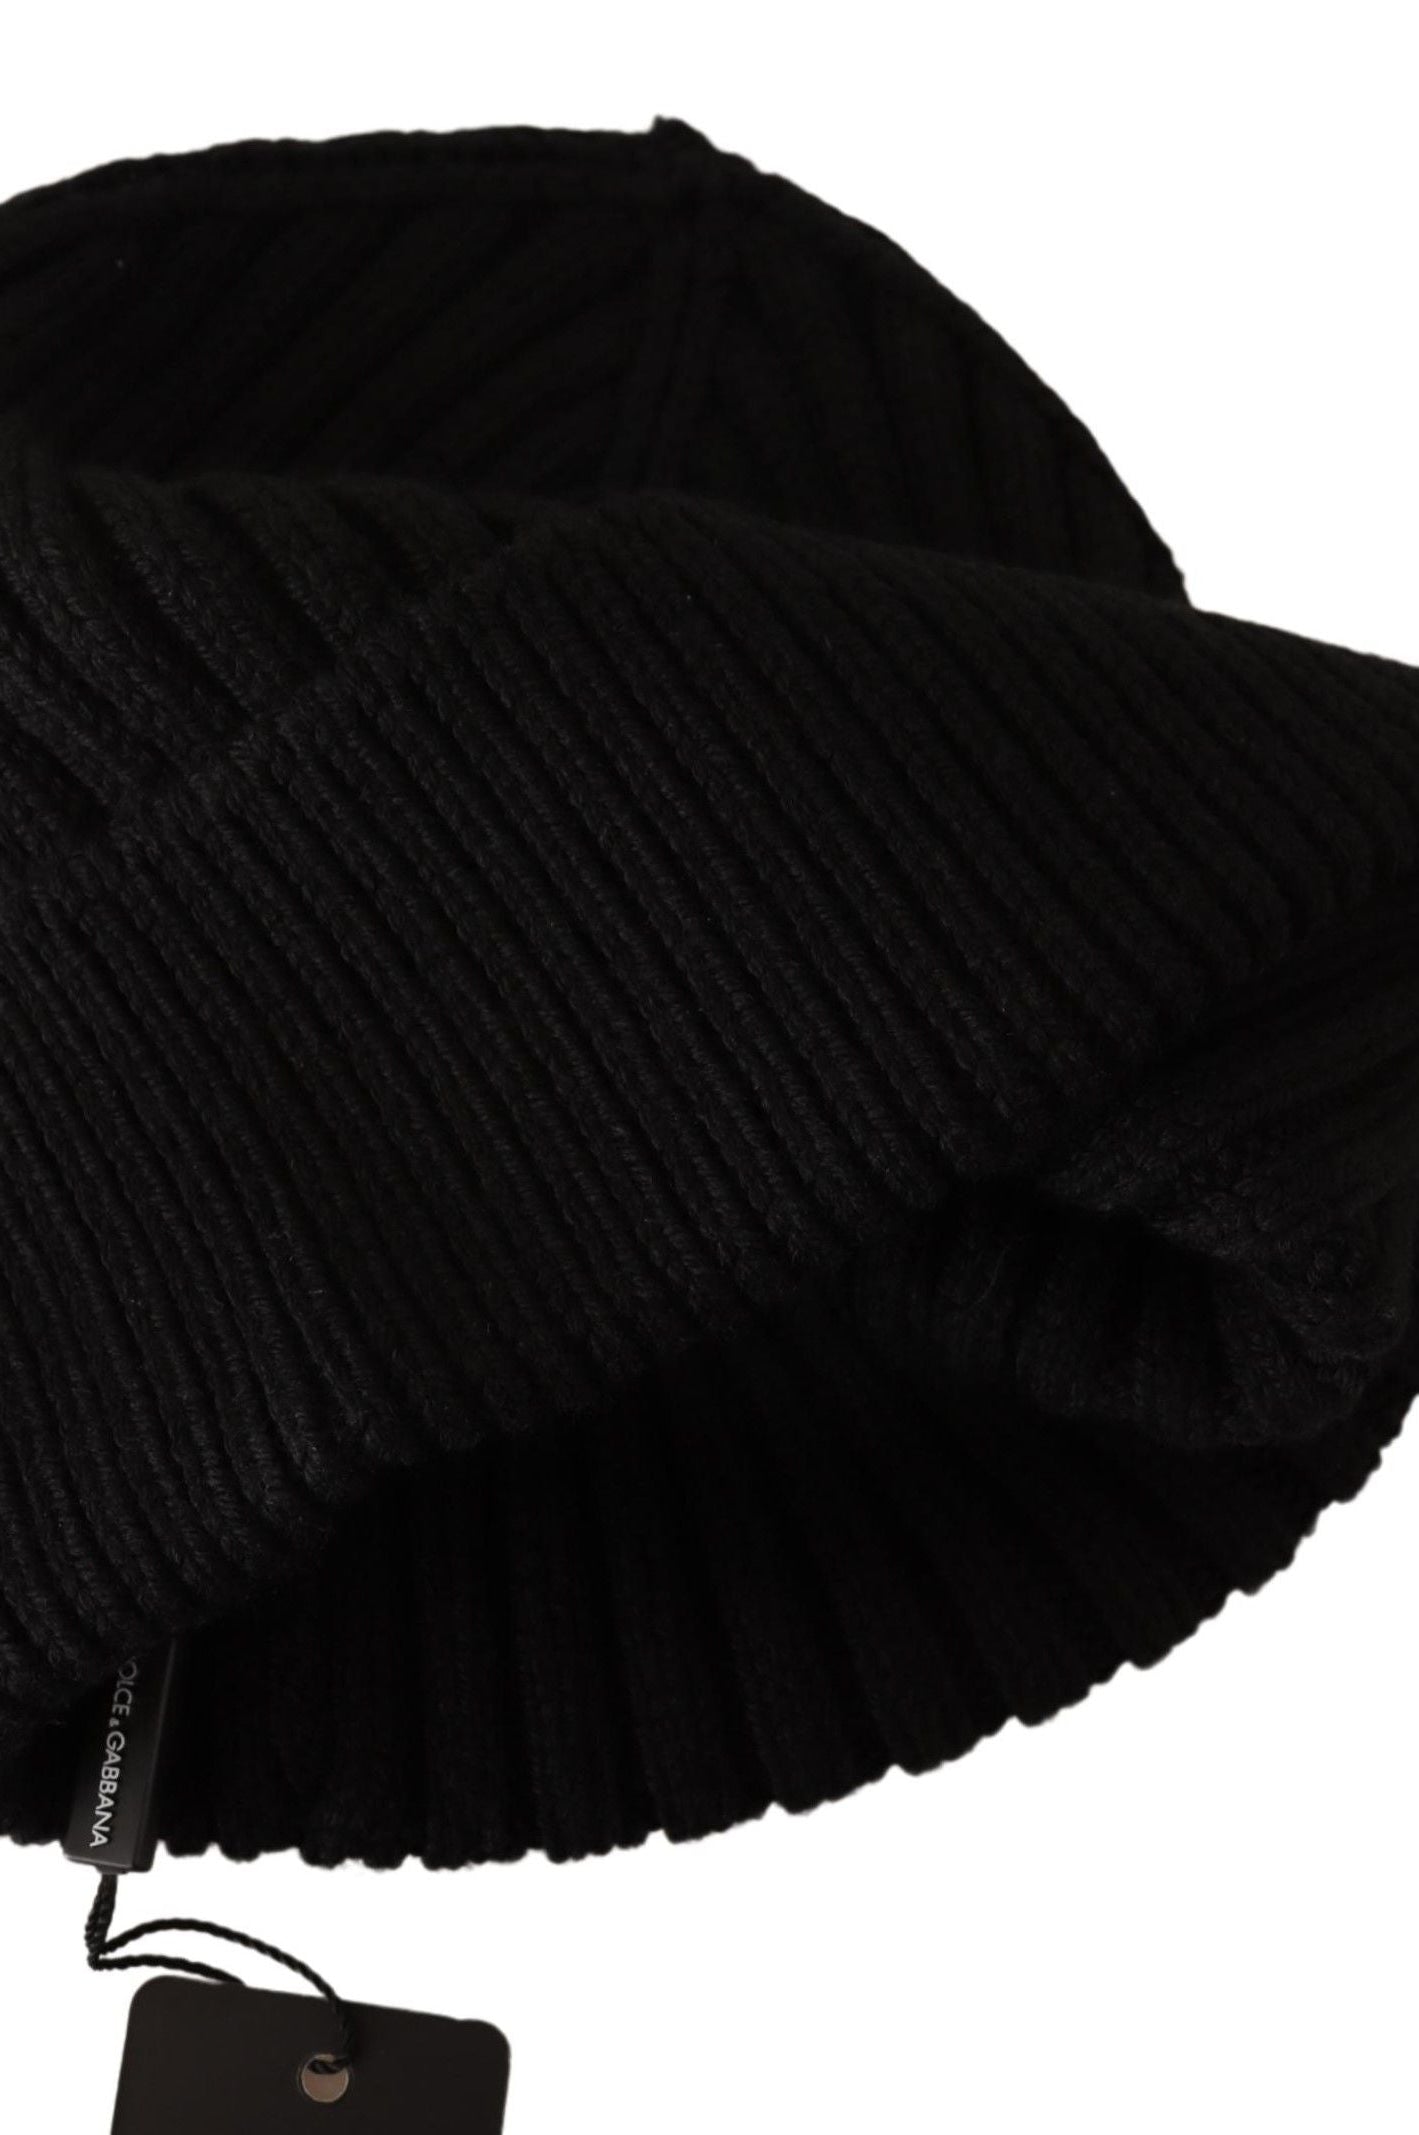 Dolce & Gabbana Black Wool Knit Women Winter Hat GENUINE AUTHENTIC BRAND LLC